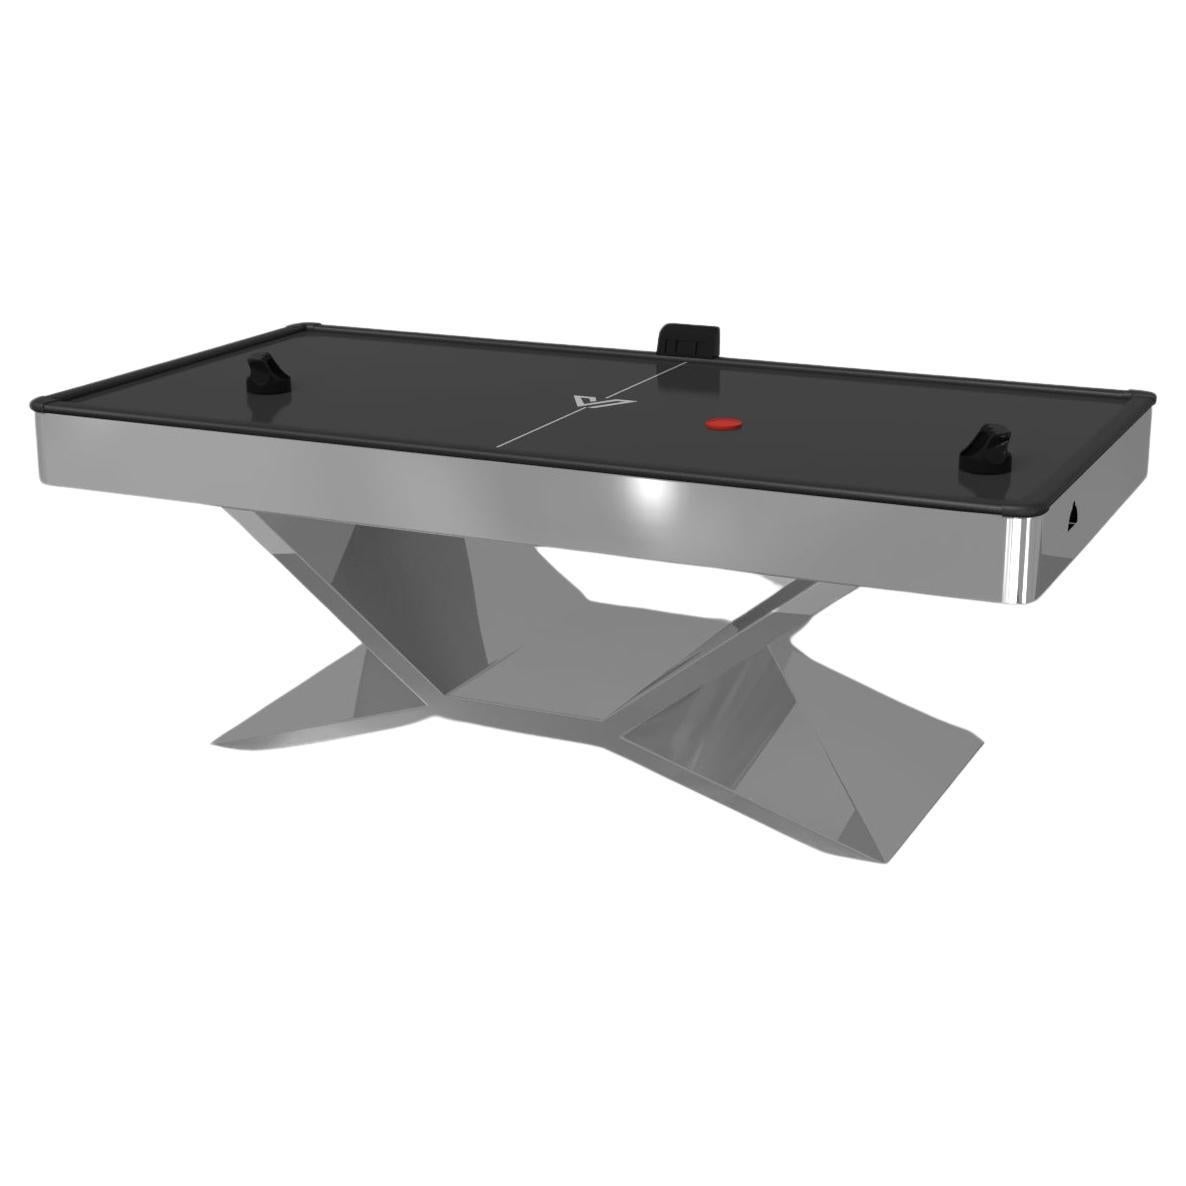 Elevate Customs Kors Air Hockey Tables /Stainless Steel Metal in 7' -Made in USA